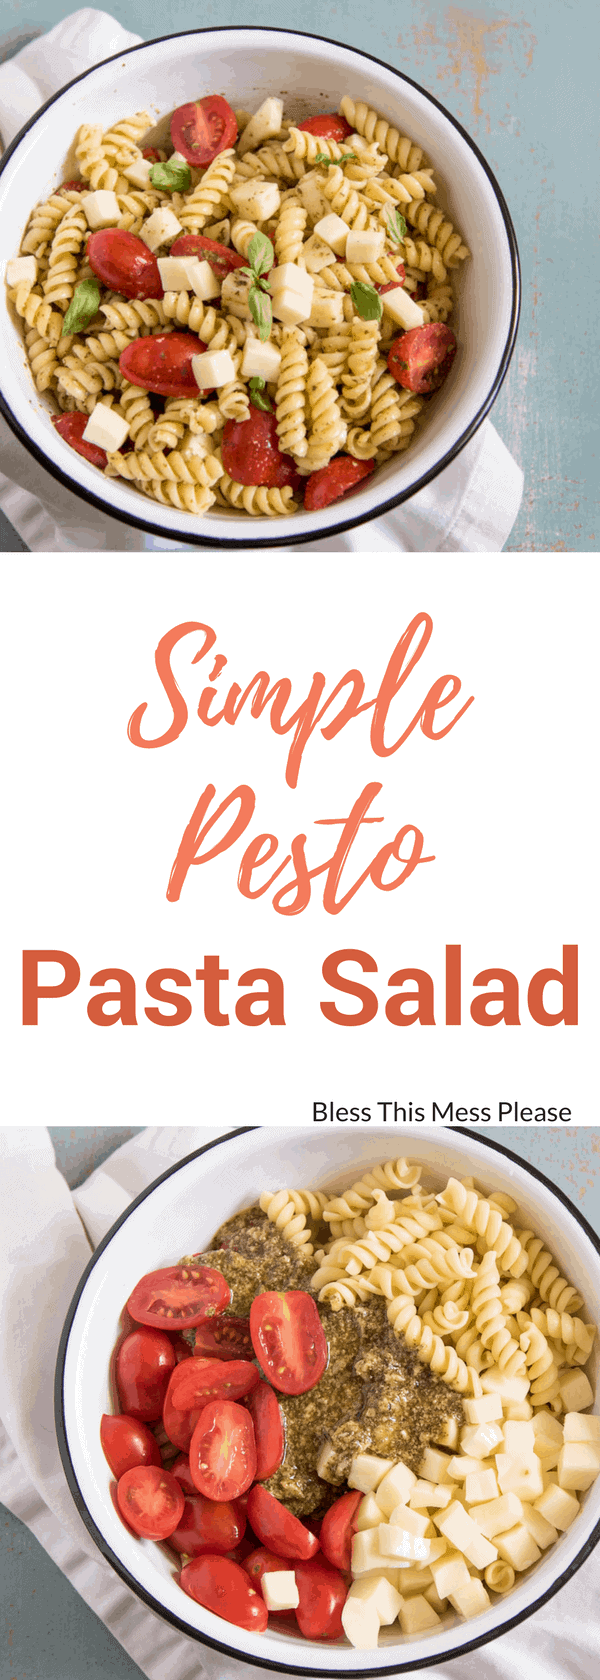 Quick & Easy Pesto Pasta Salad | The Best Summer Side Dish Recipe